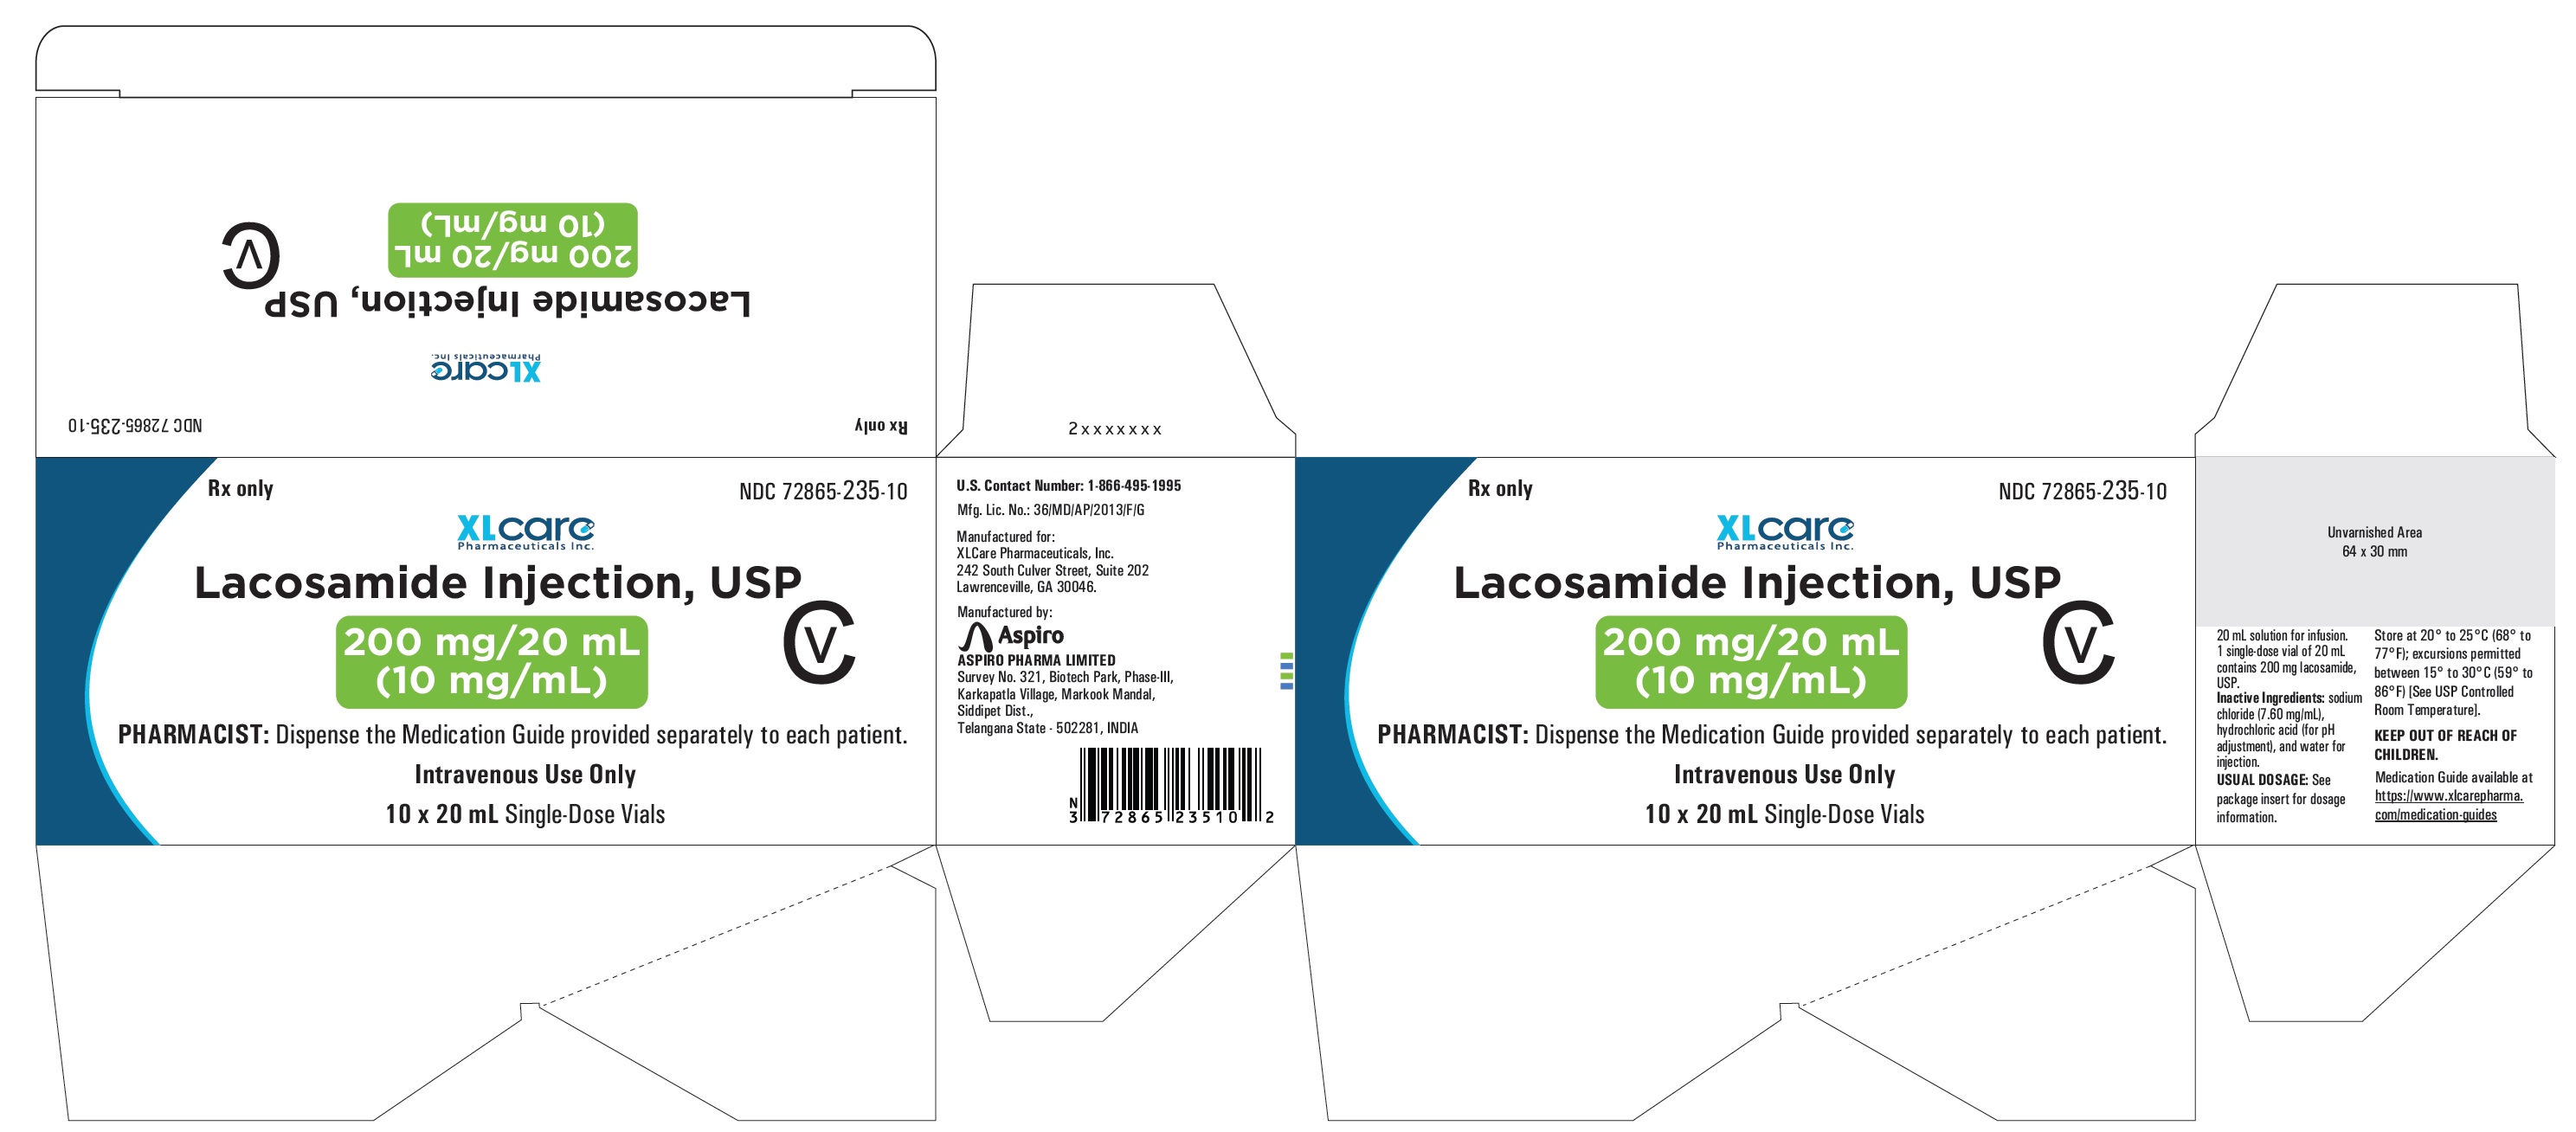 lacosamide-inj-carton-label-10-mg-ml